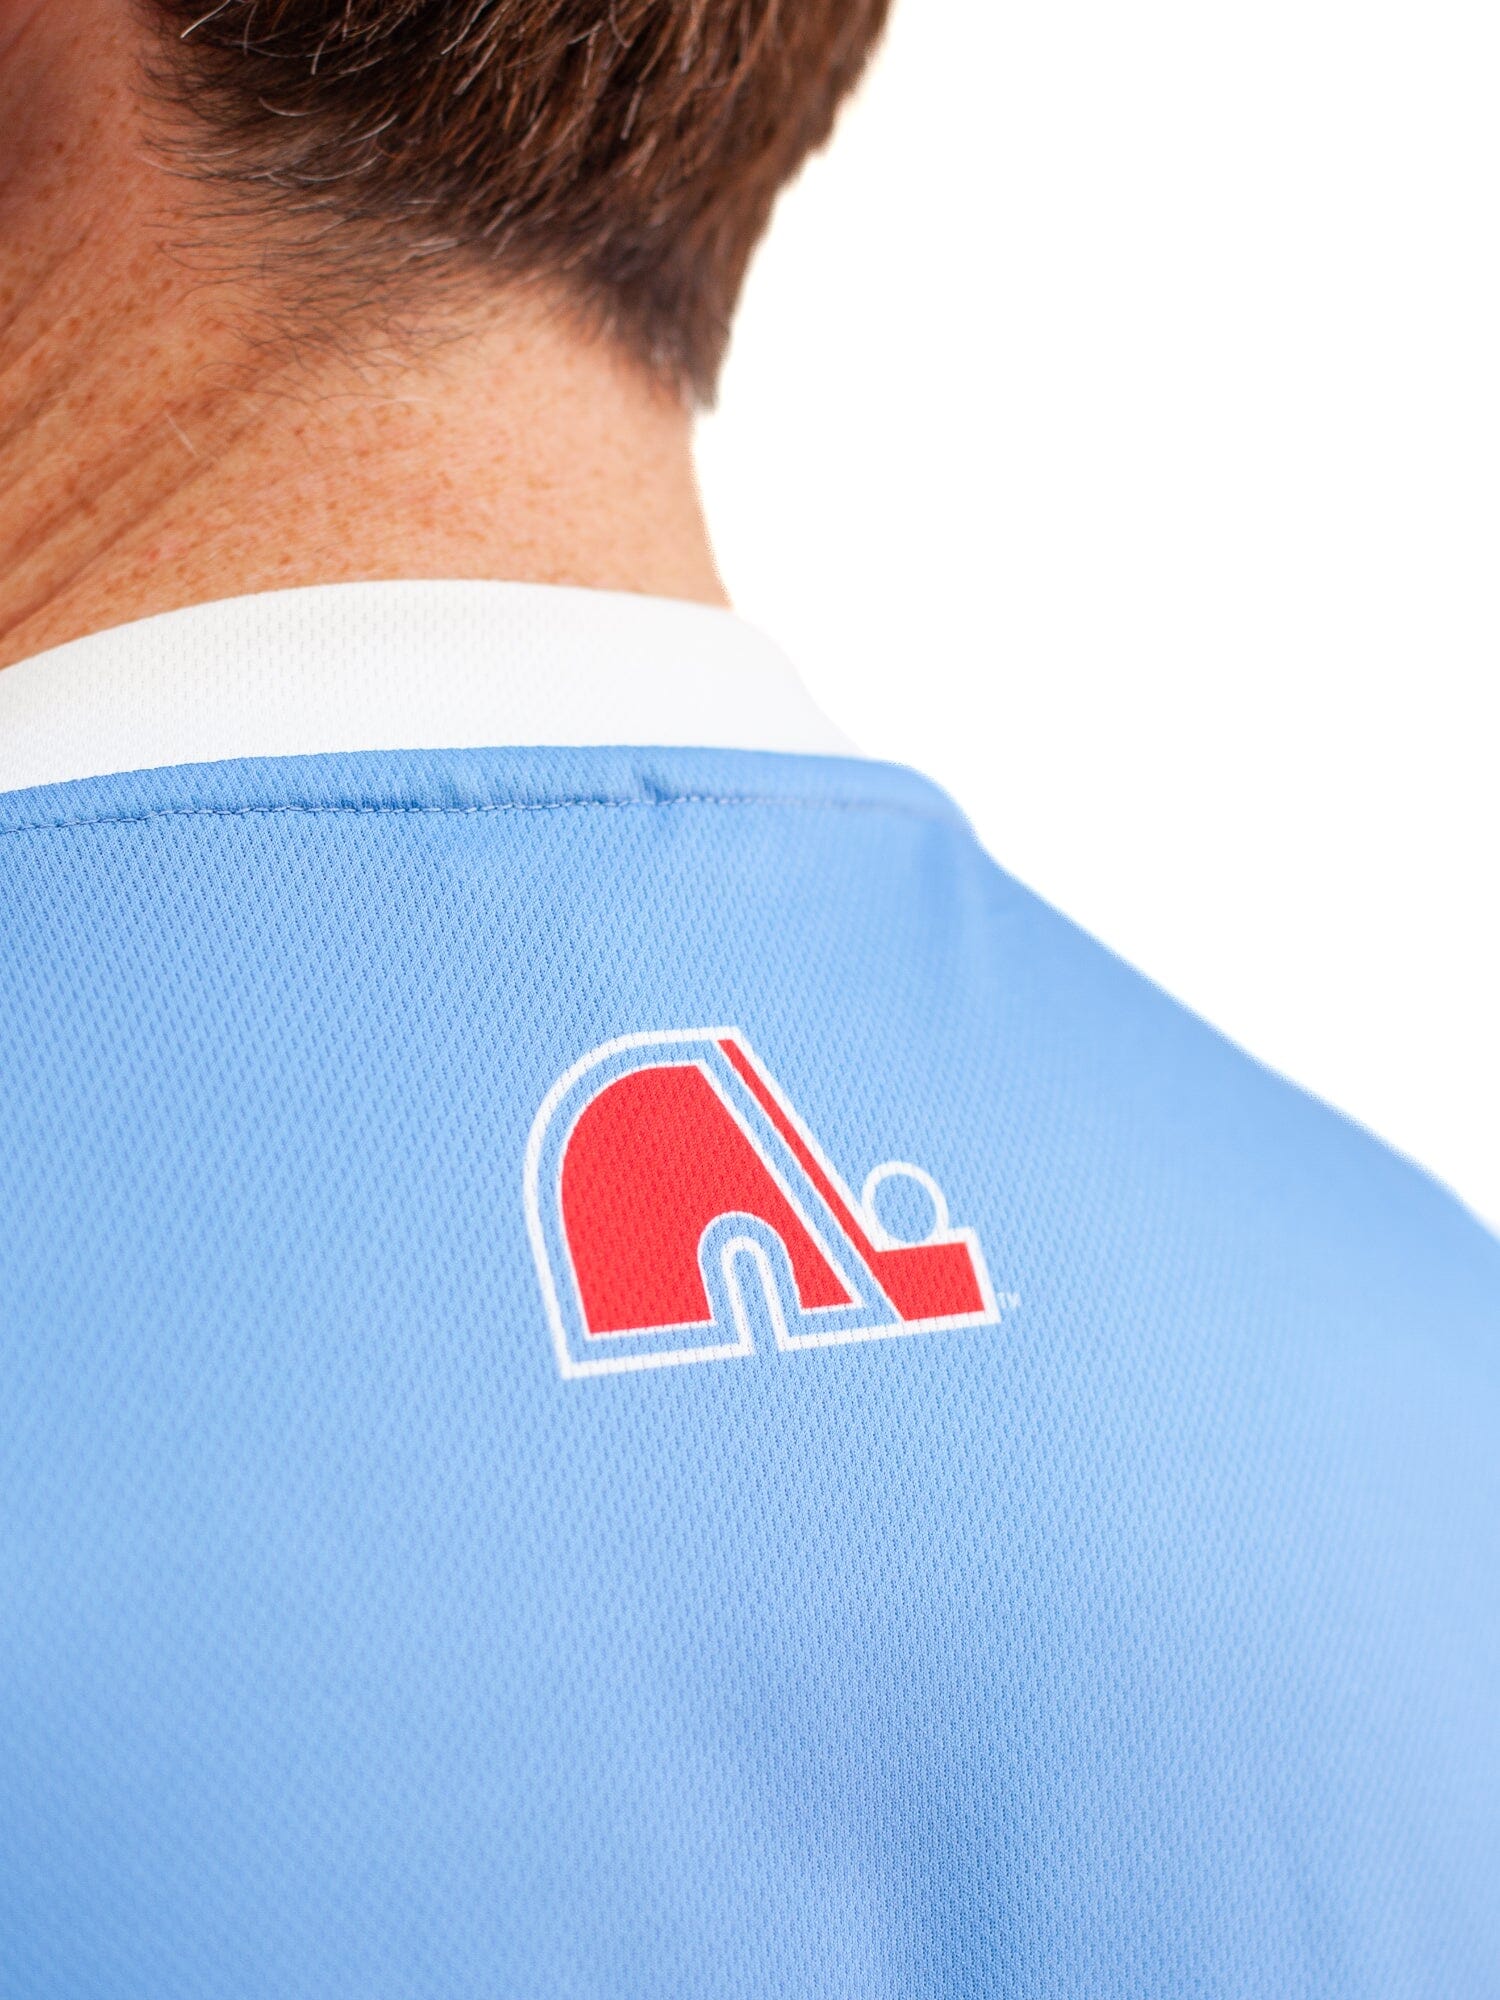 Quebec Nordiques | Essential T-Shirt